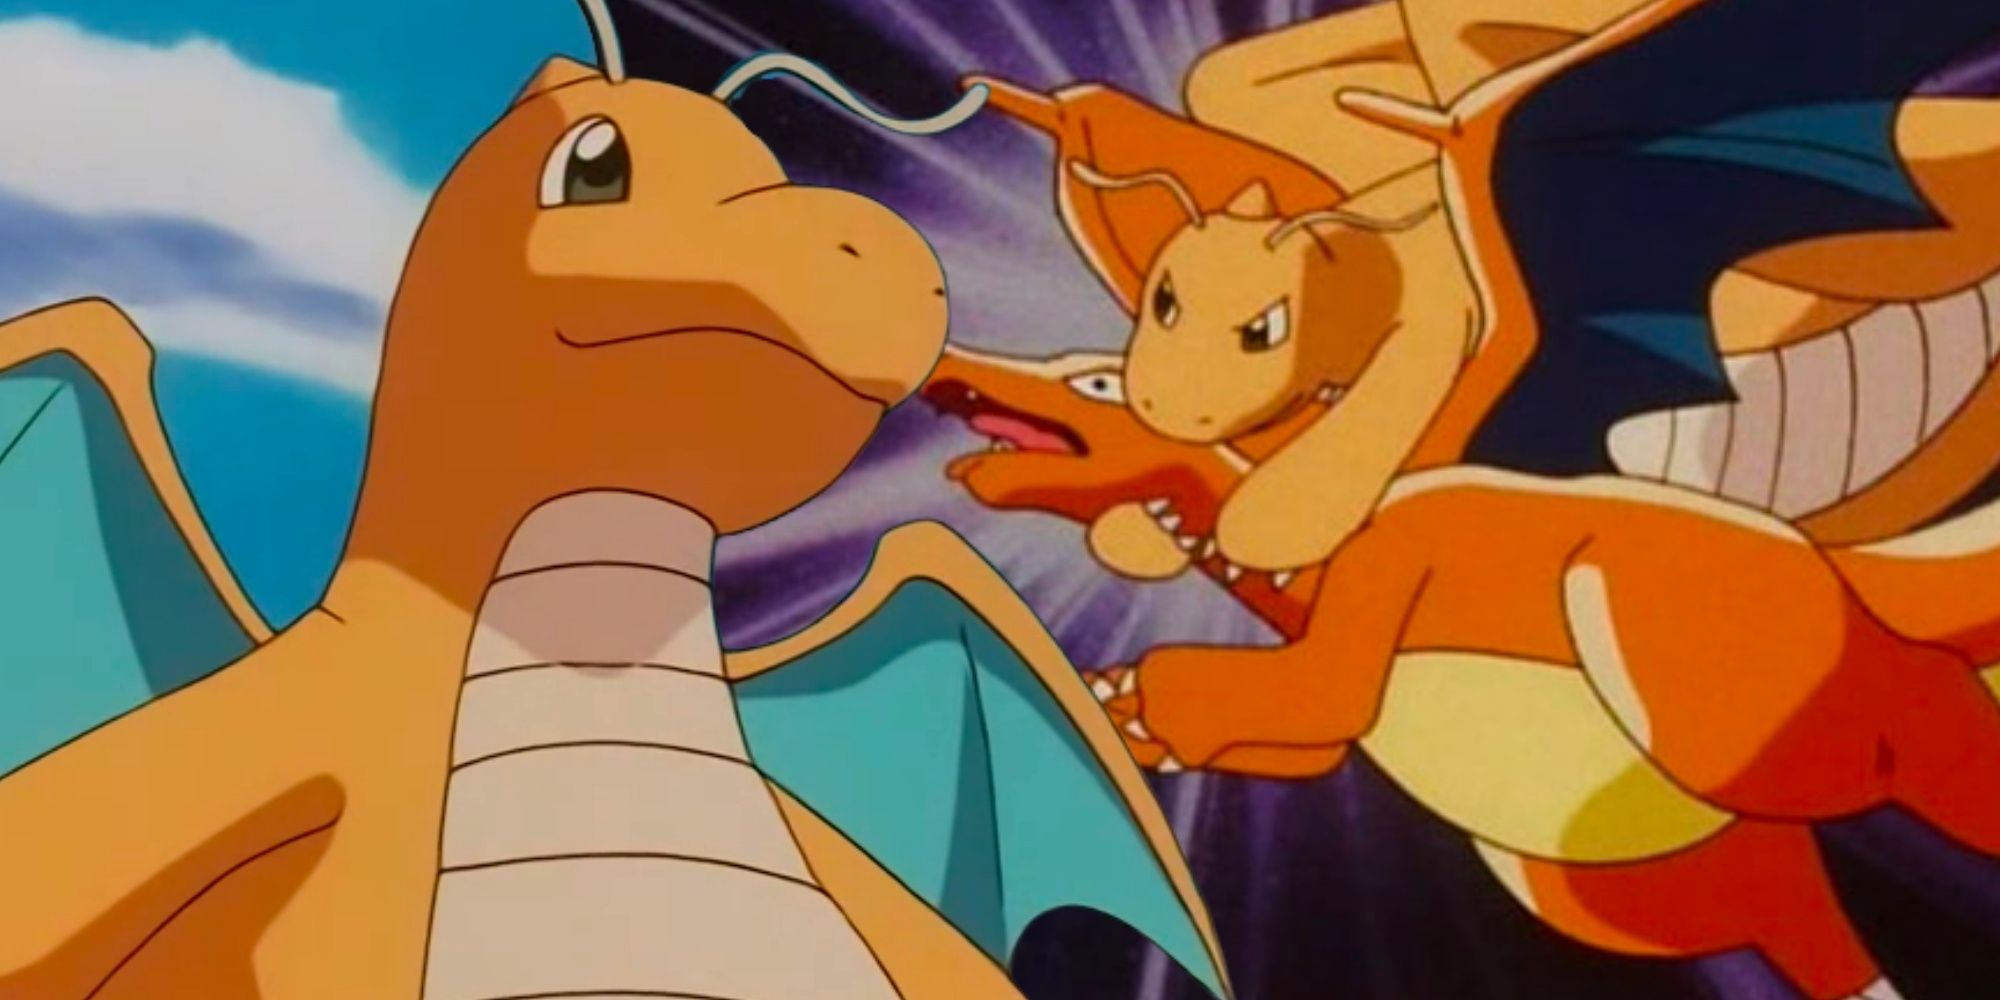 Dragonite battling Charizard Nintendo Game and Anime Pokemon